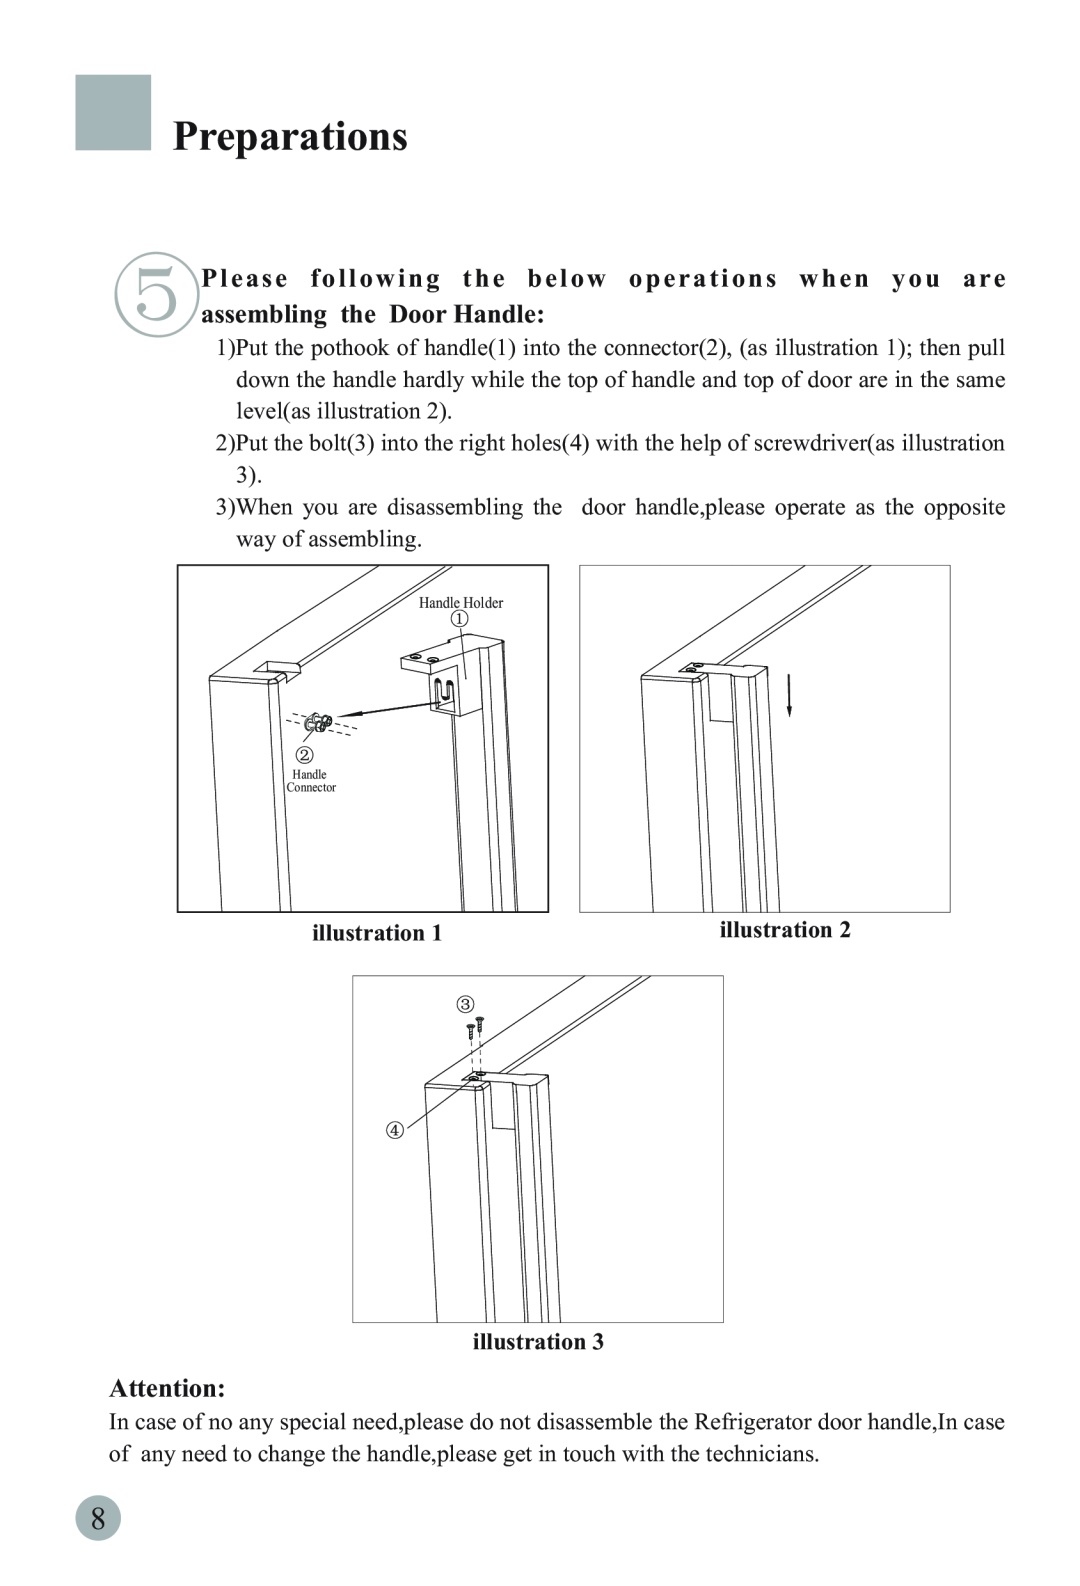 Haier HRF-663IRG manual assembling the Door Handle, Preparations, illustration 